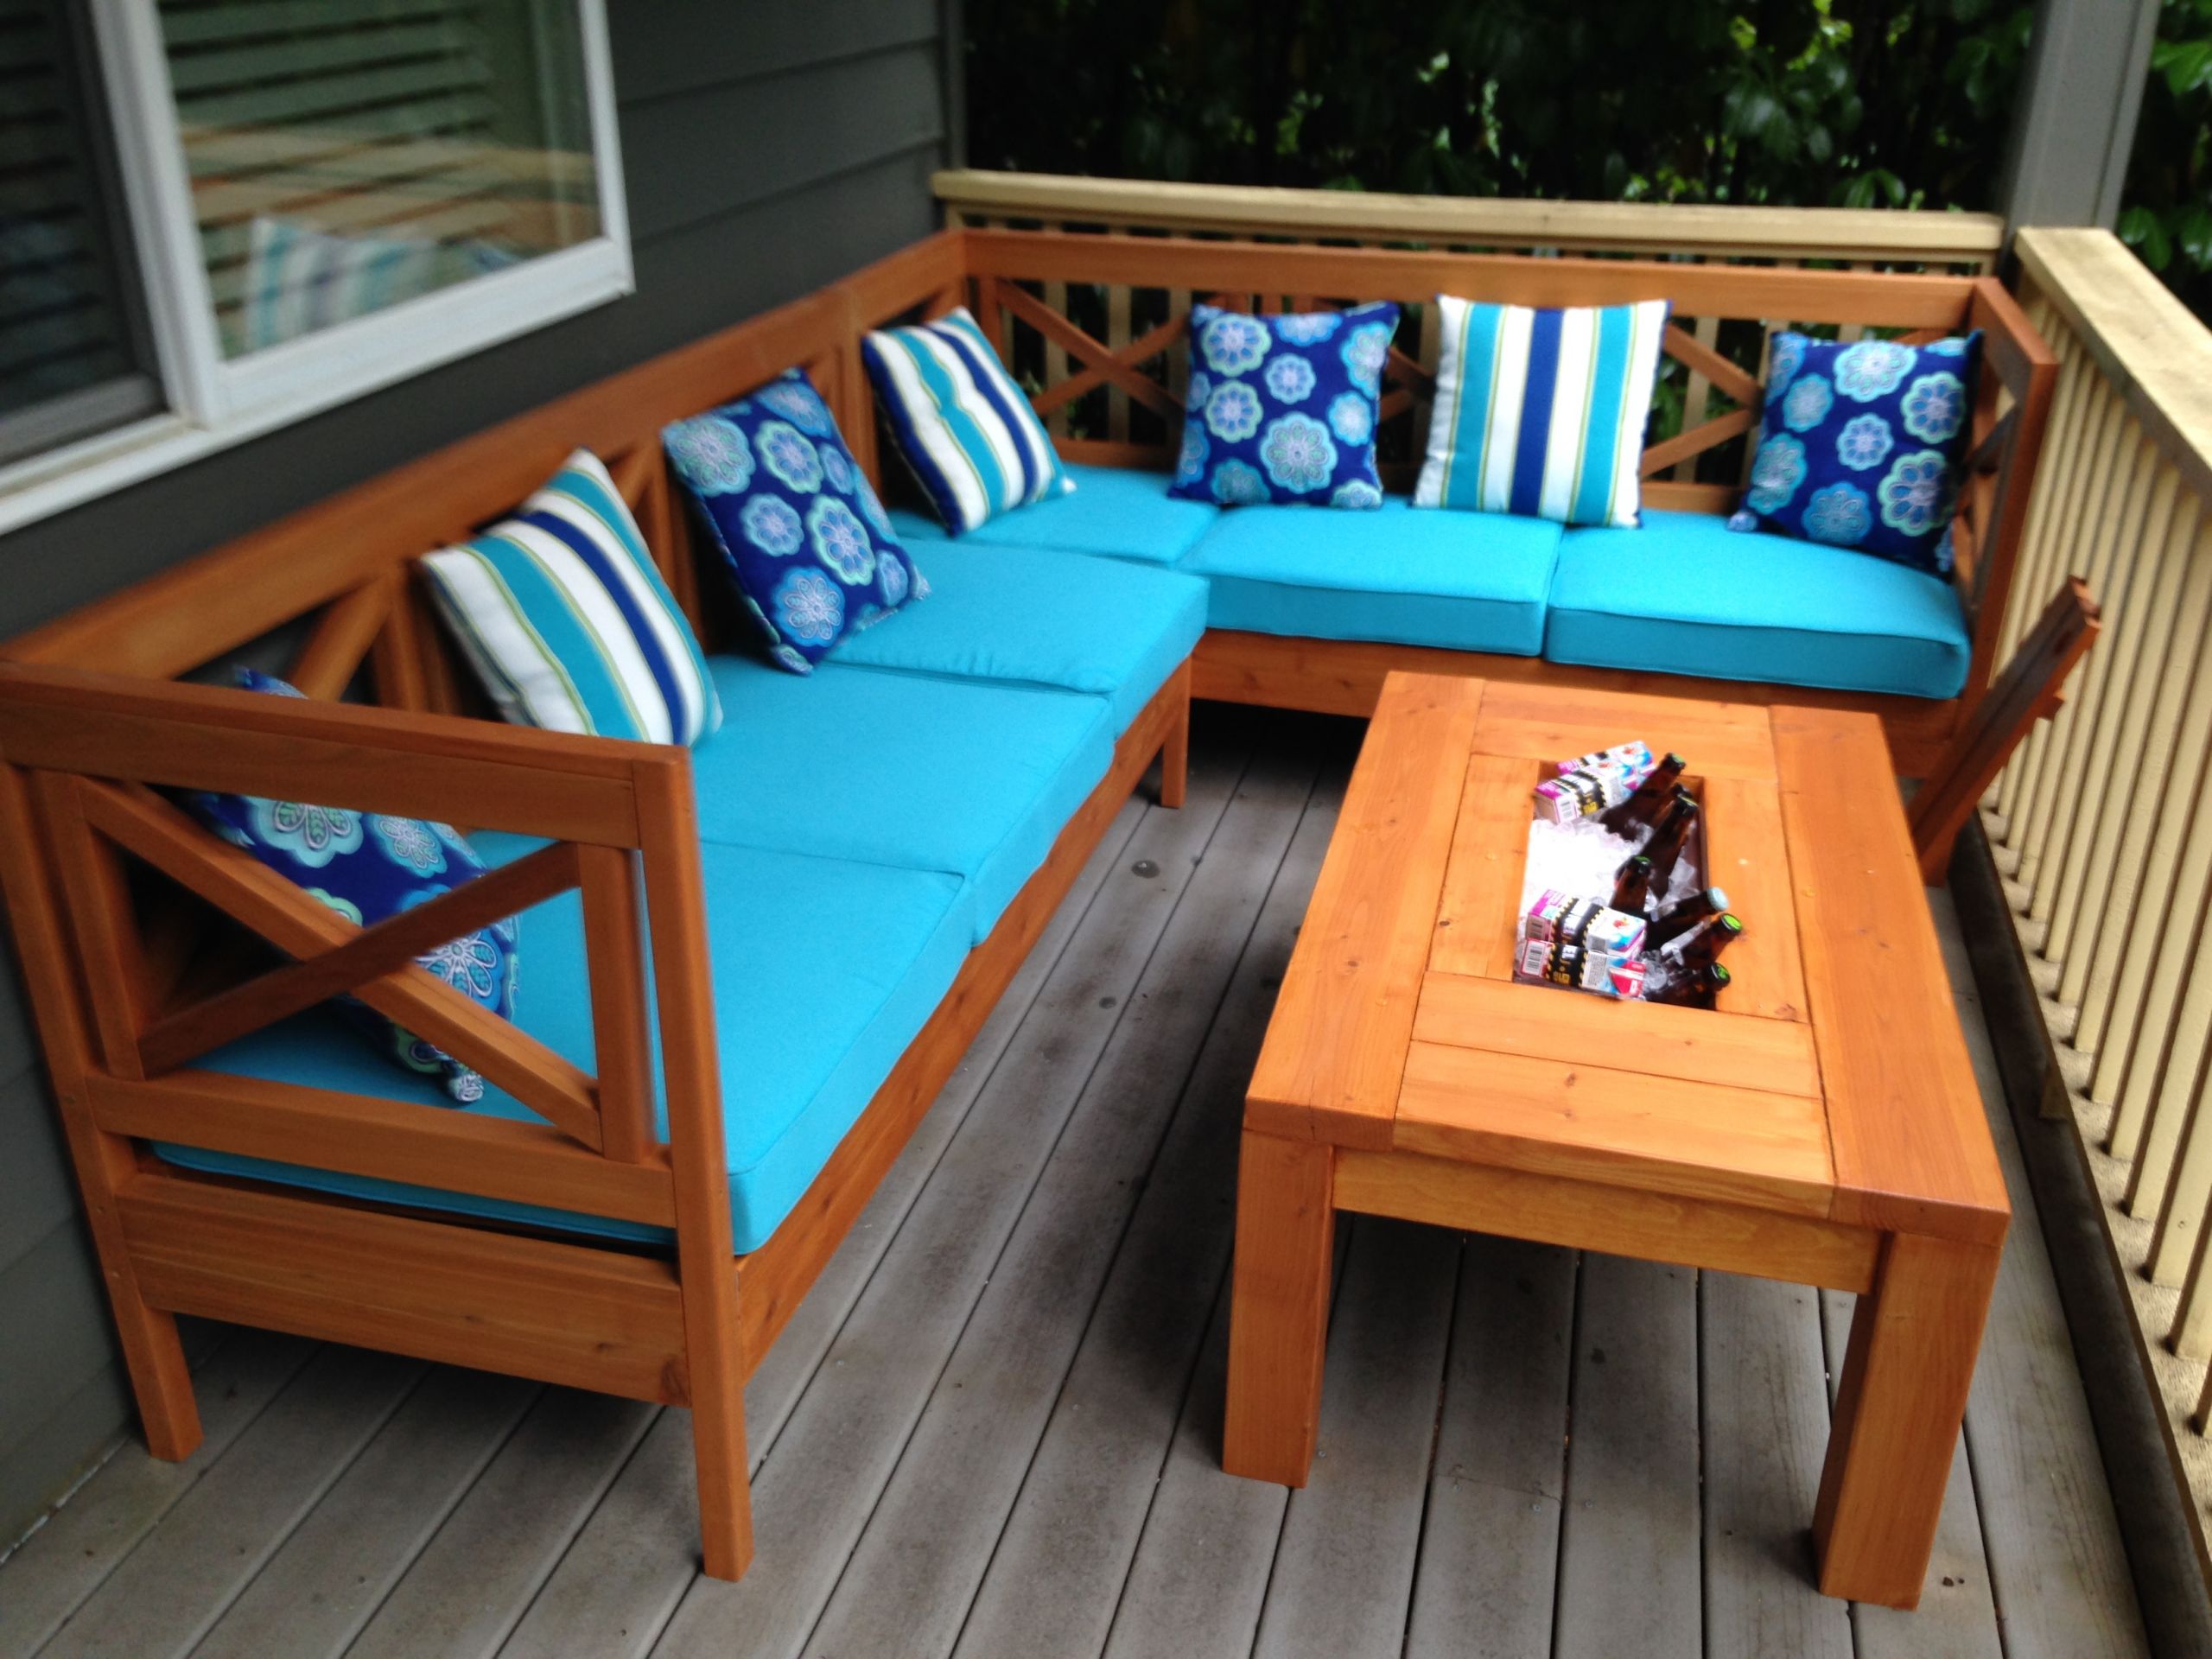 DIY Outdoor Furniture Plans
 Ana White